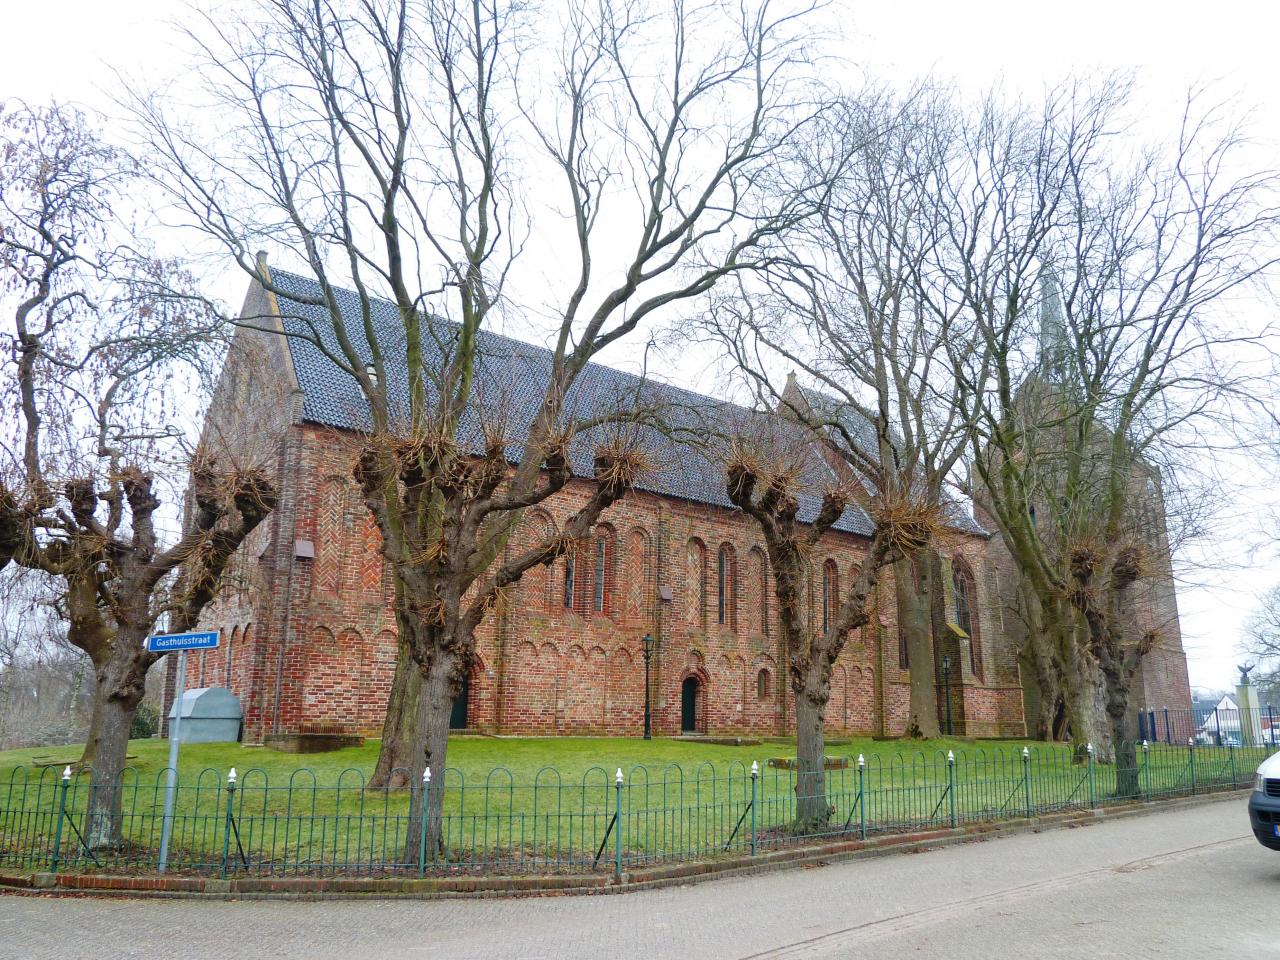 Romanesque church made of red bricks